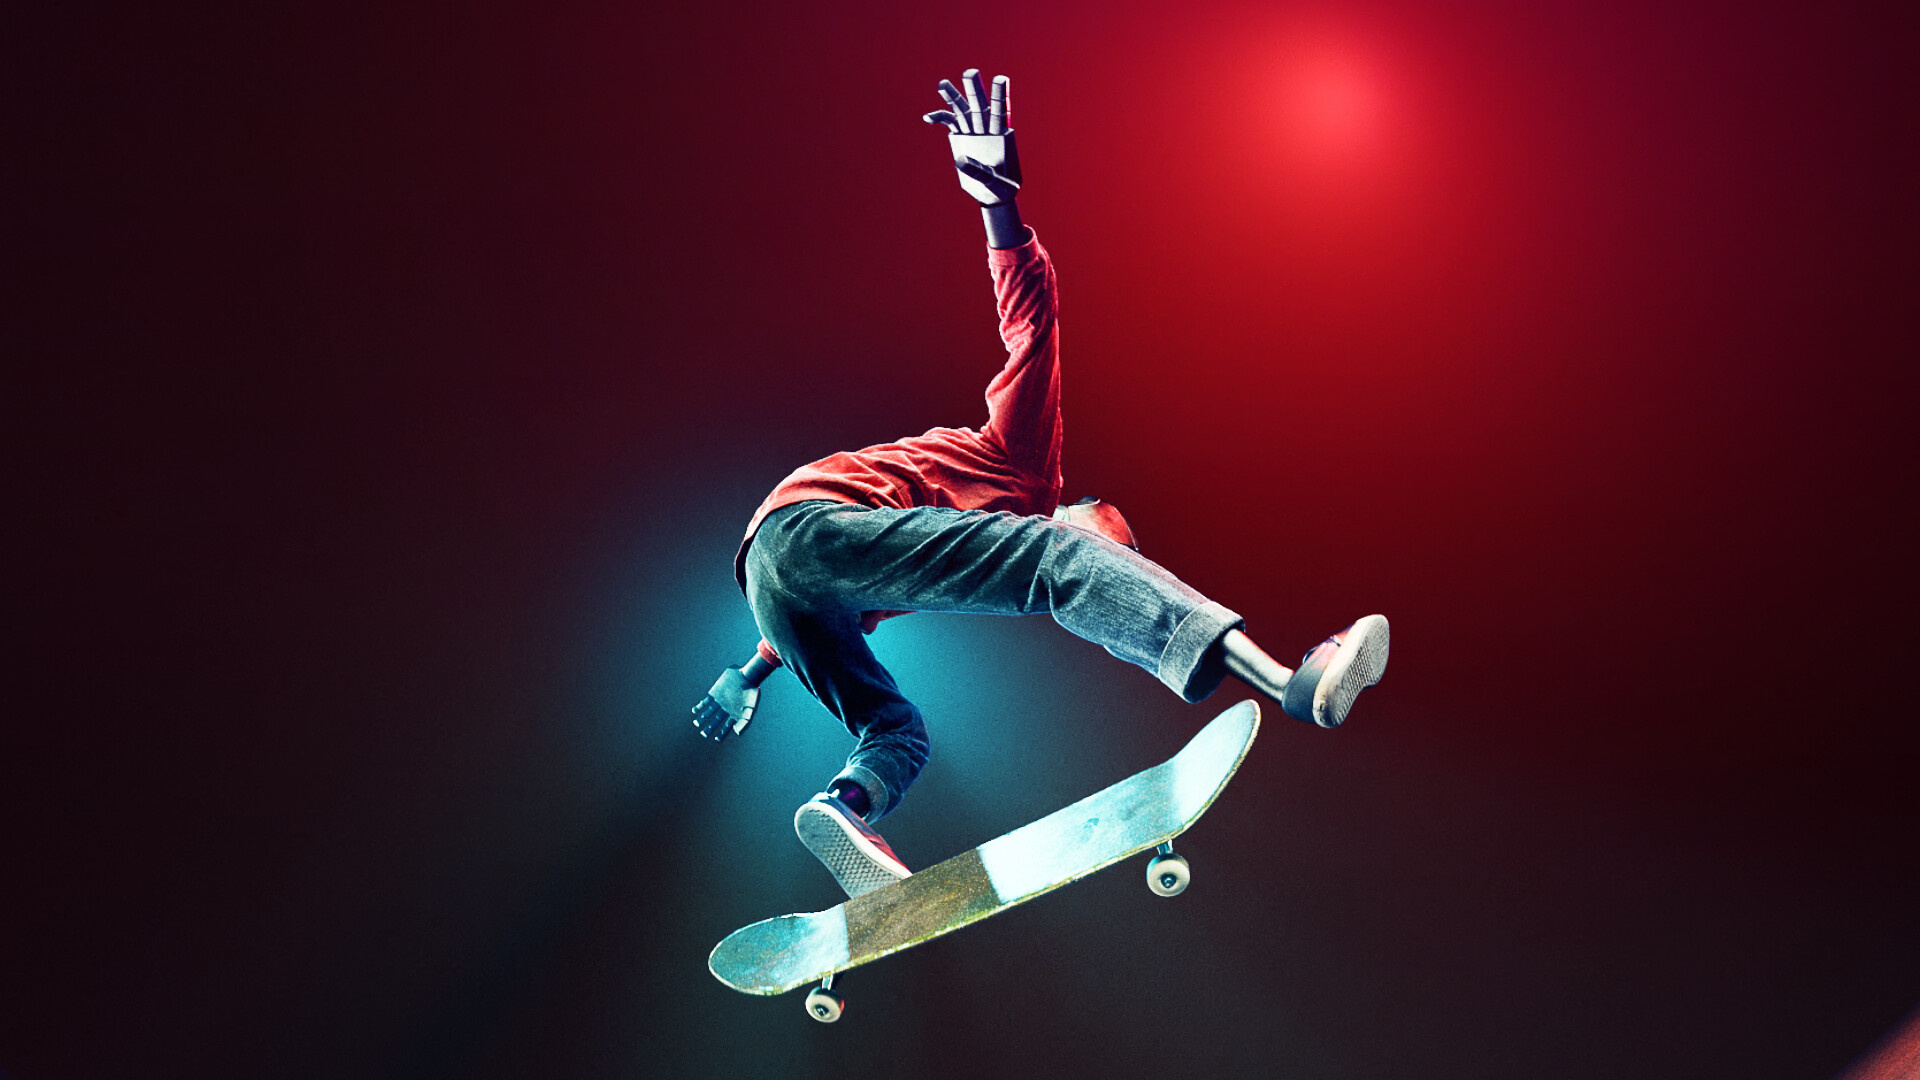 Skateboarding: Frontside Heelflip trick using a standard skateboard, Extreme action sport. 1920x1080 Full HD Background.